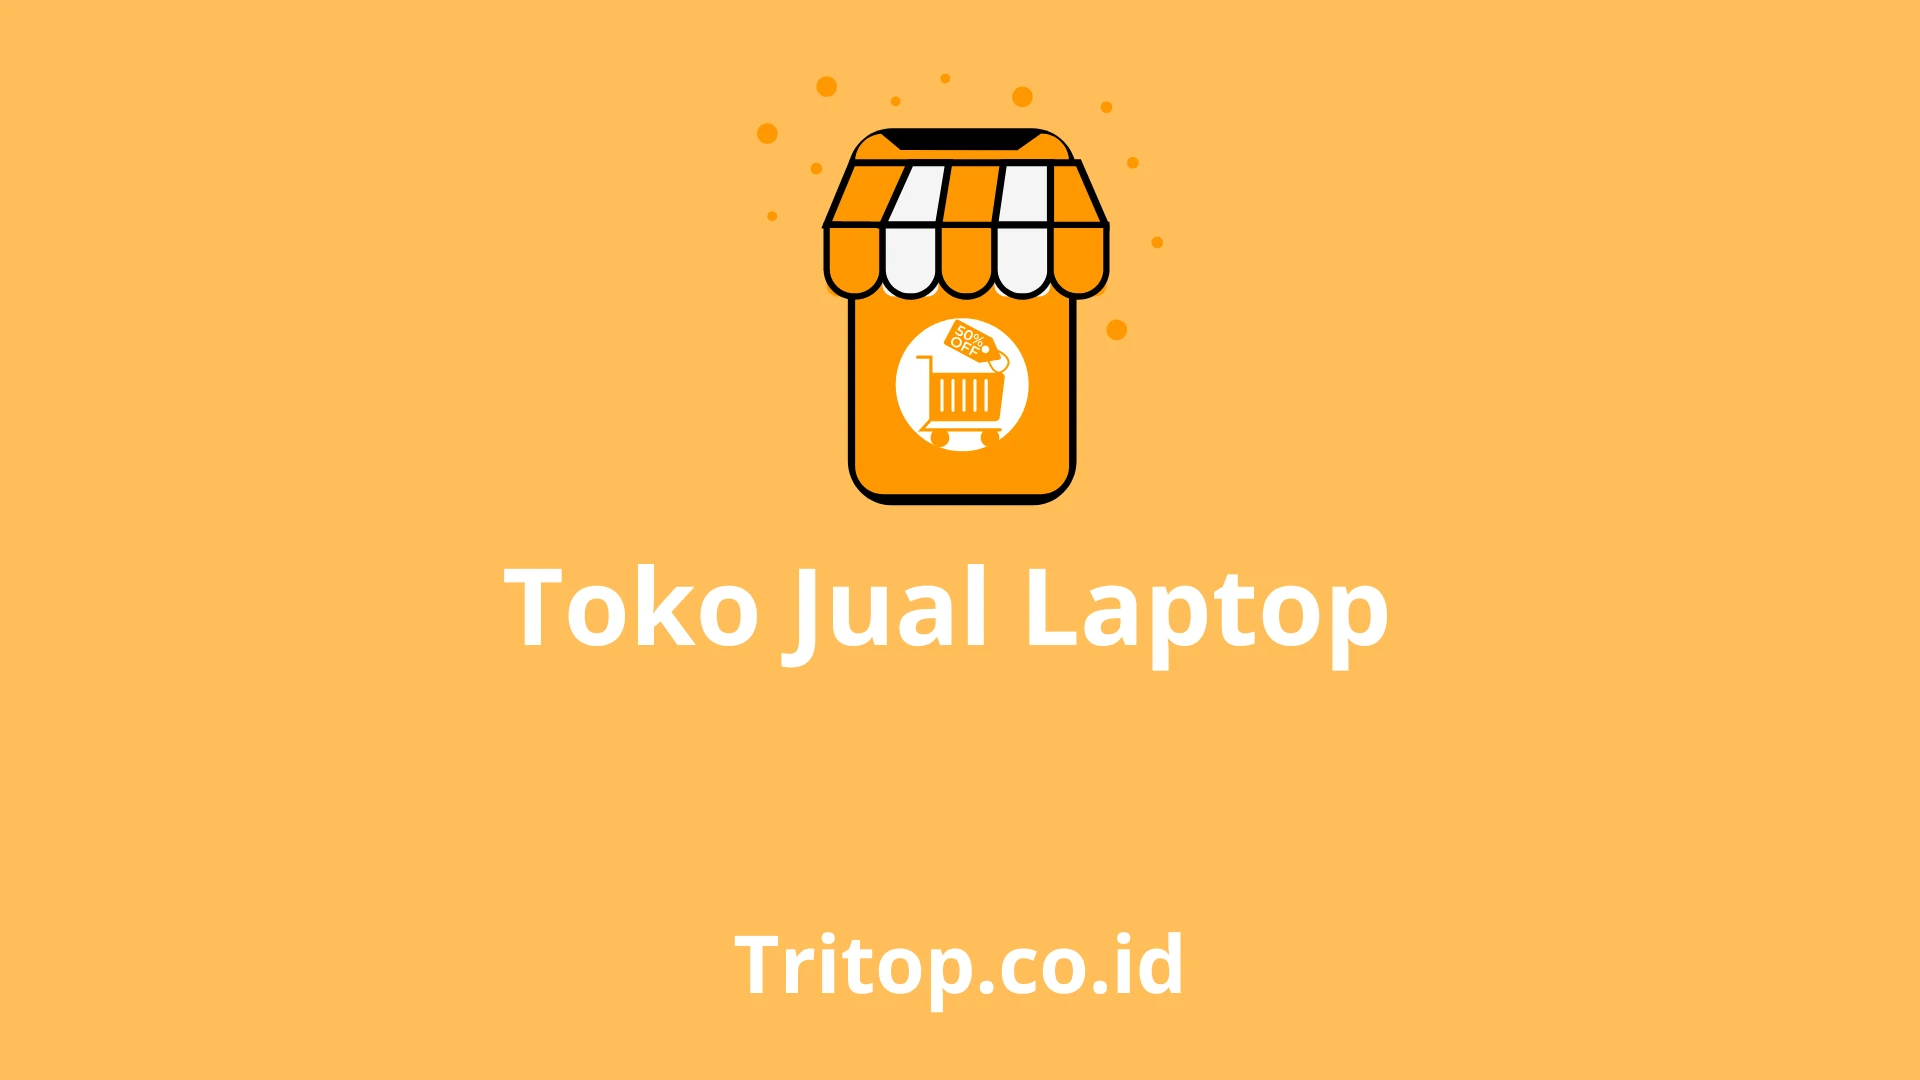 Toko Jual Laptop tritop.co.id